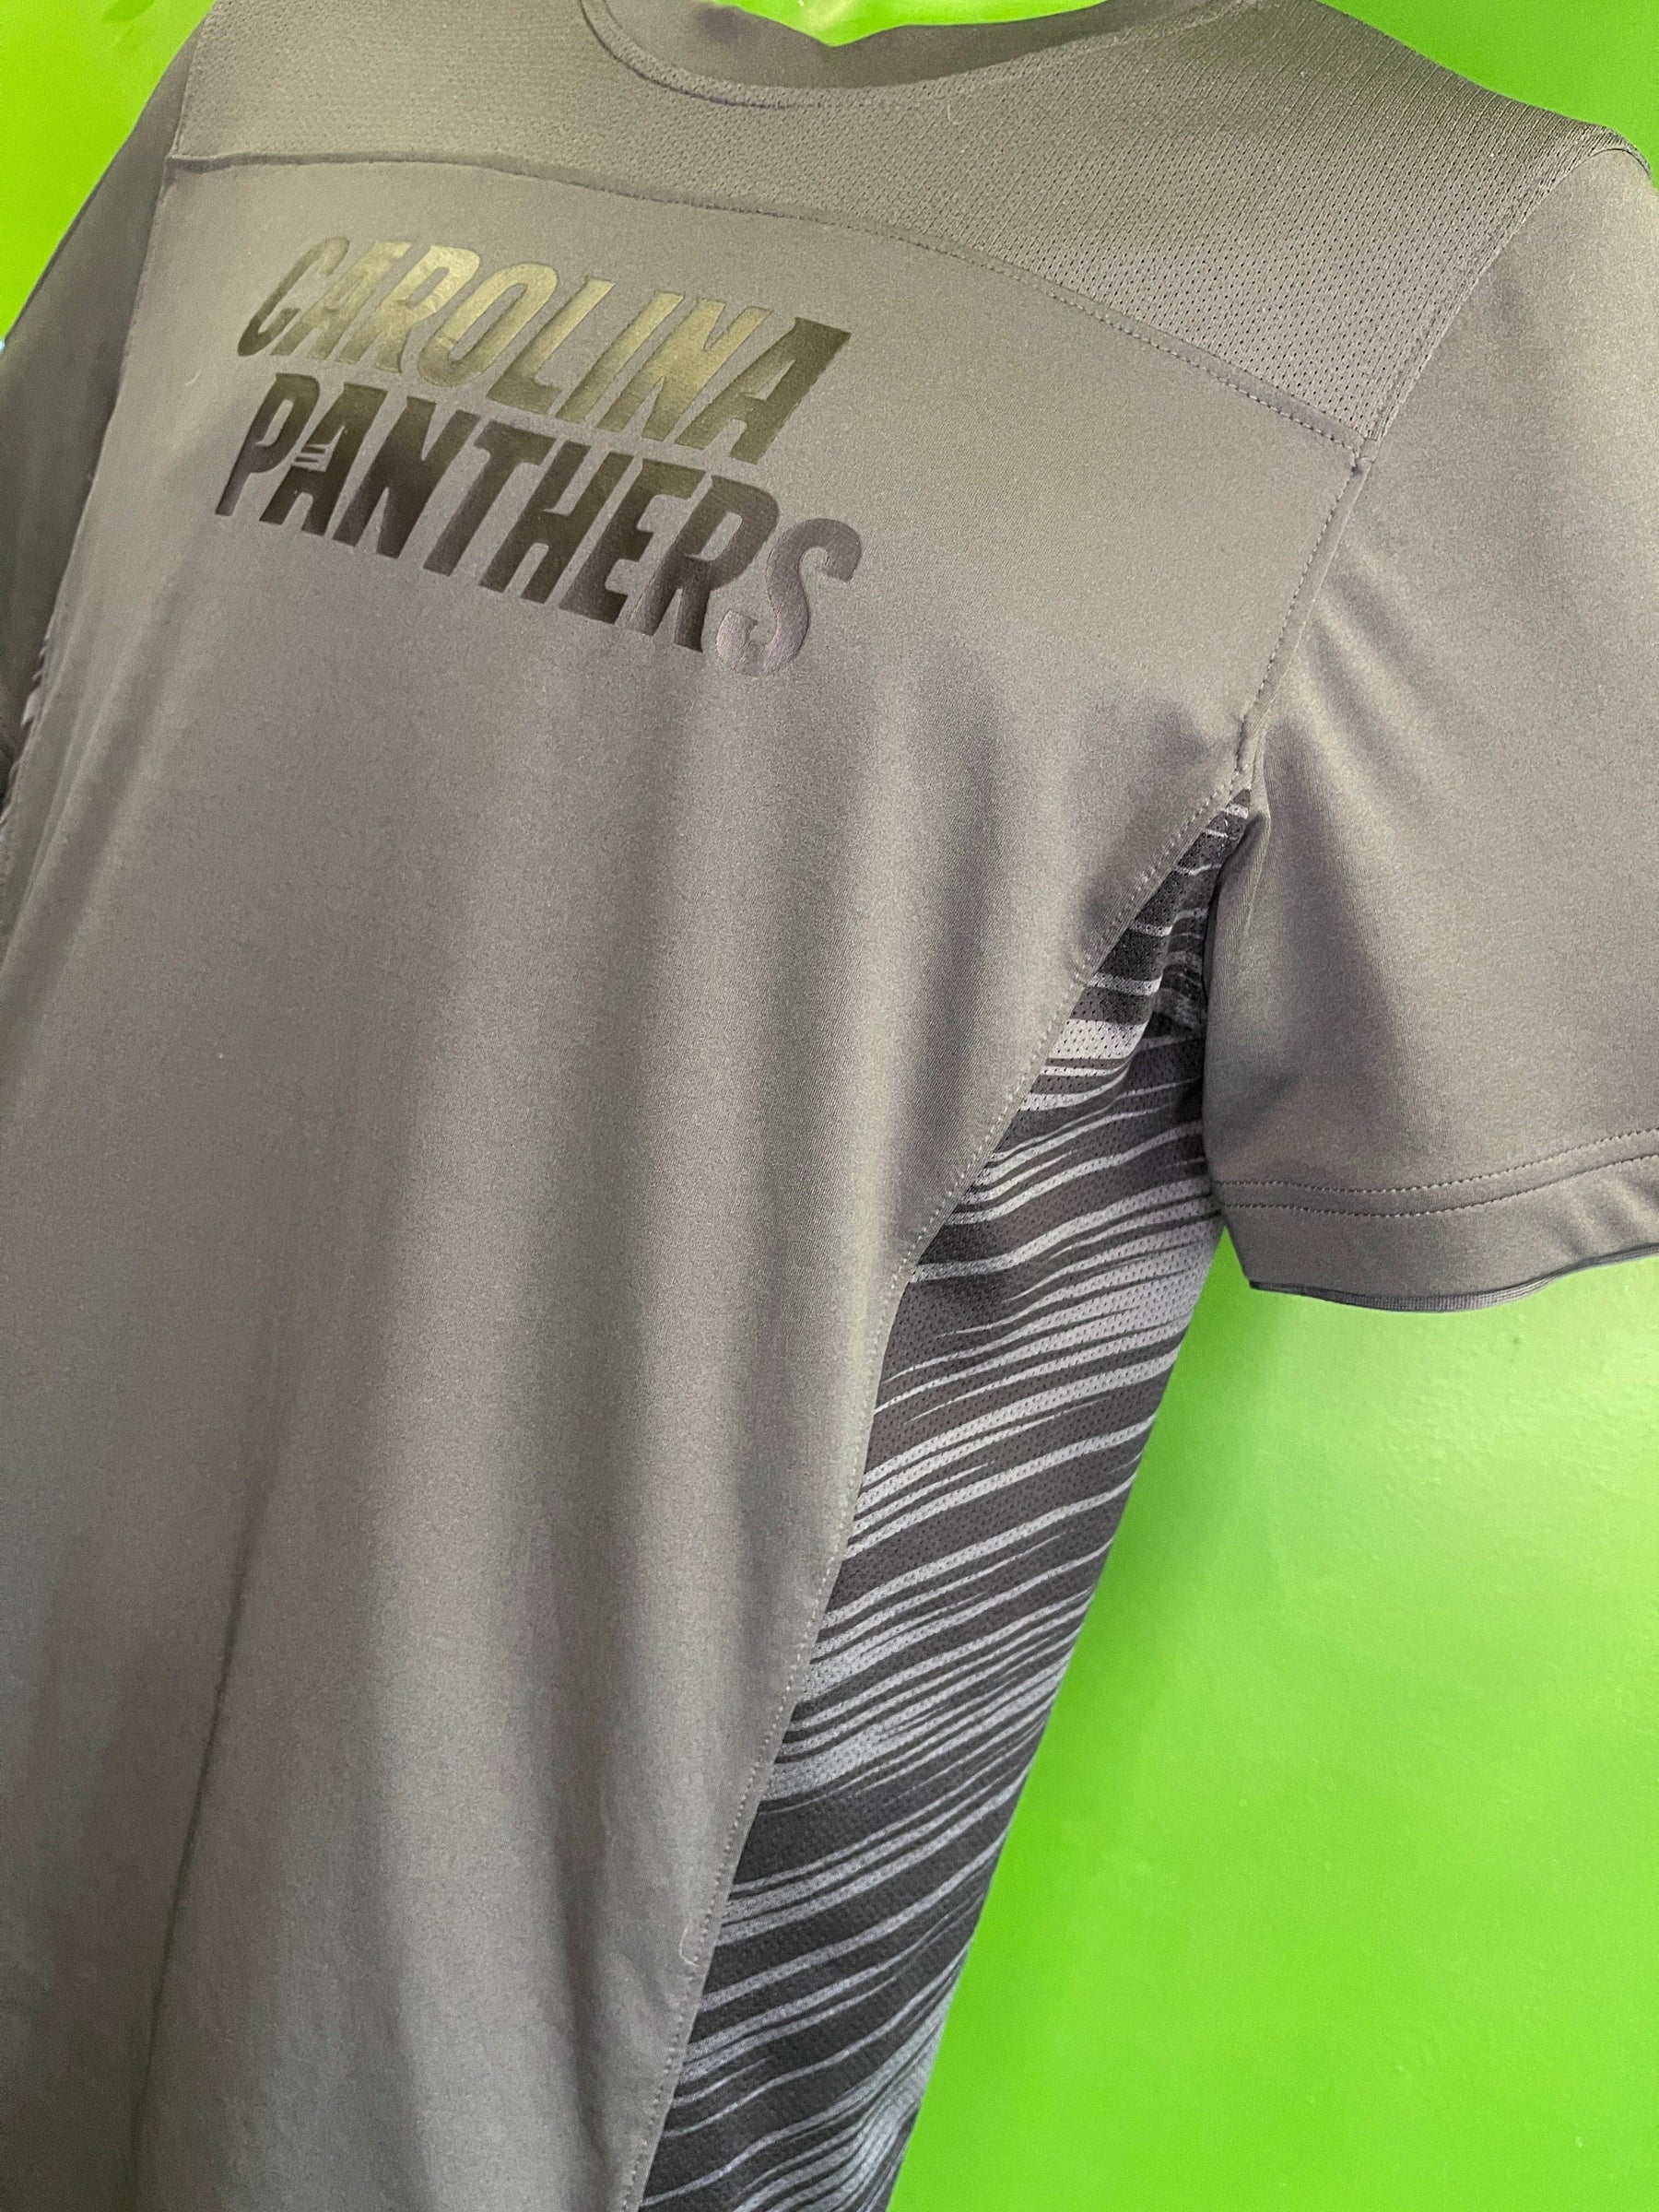 NFL Carolina Panthers Nike Dri-Fit Grey T-Shirt Men's Small